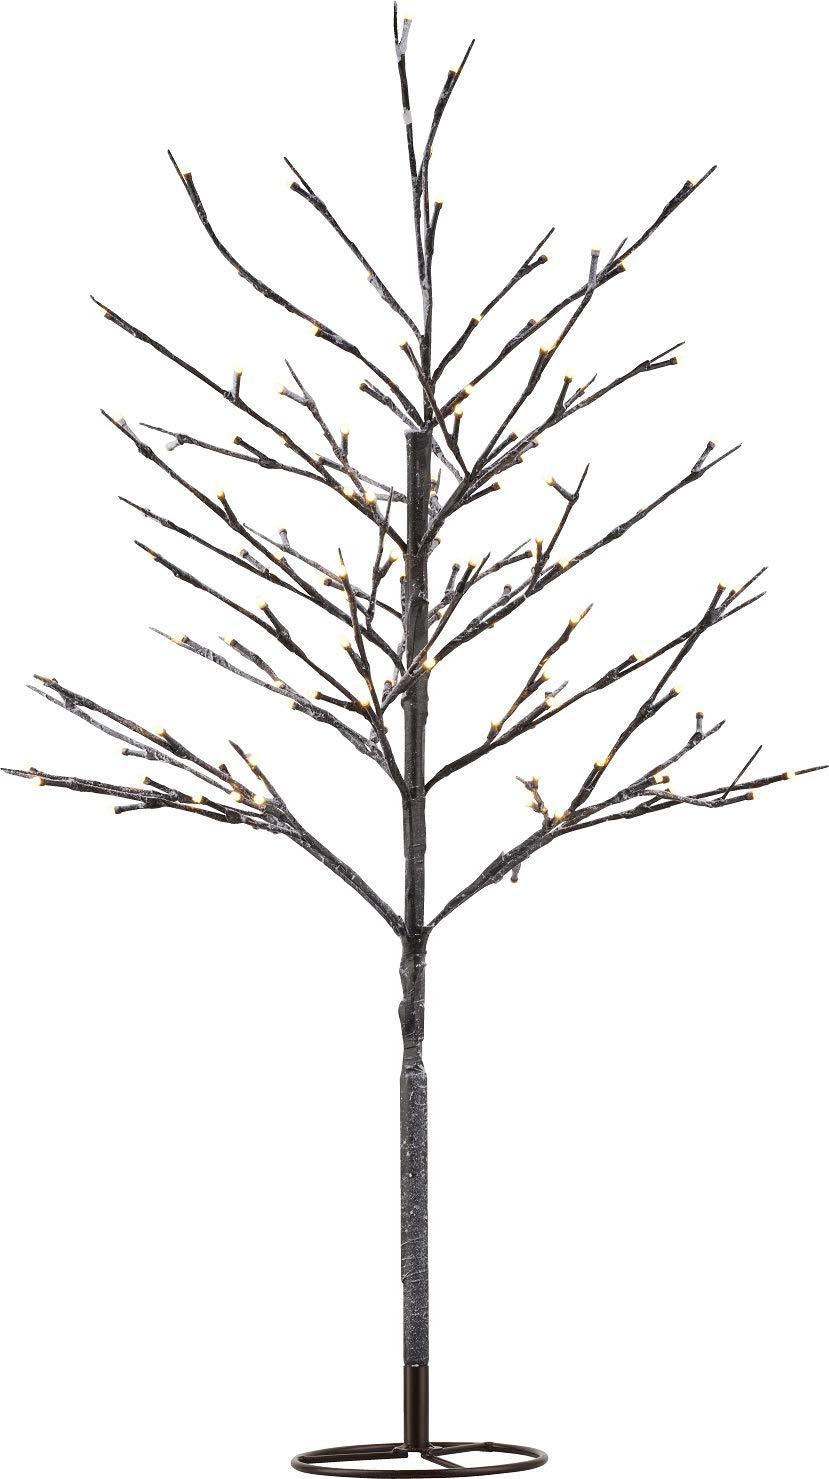 Sirius LED Baum Alex Tree 480 LED warmweiß außen 210 cm